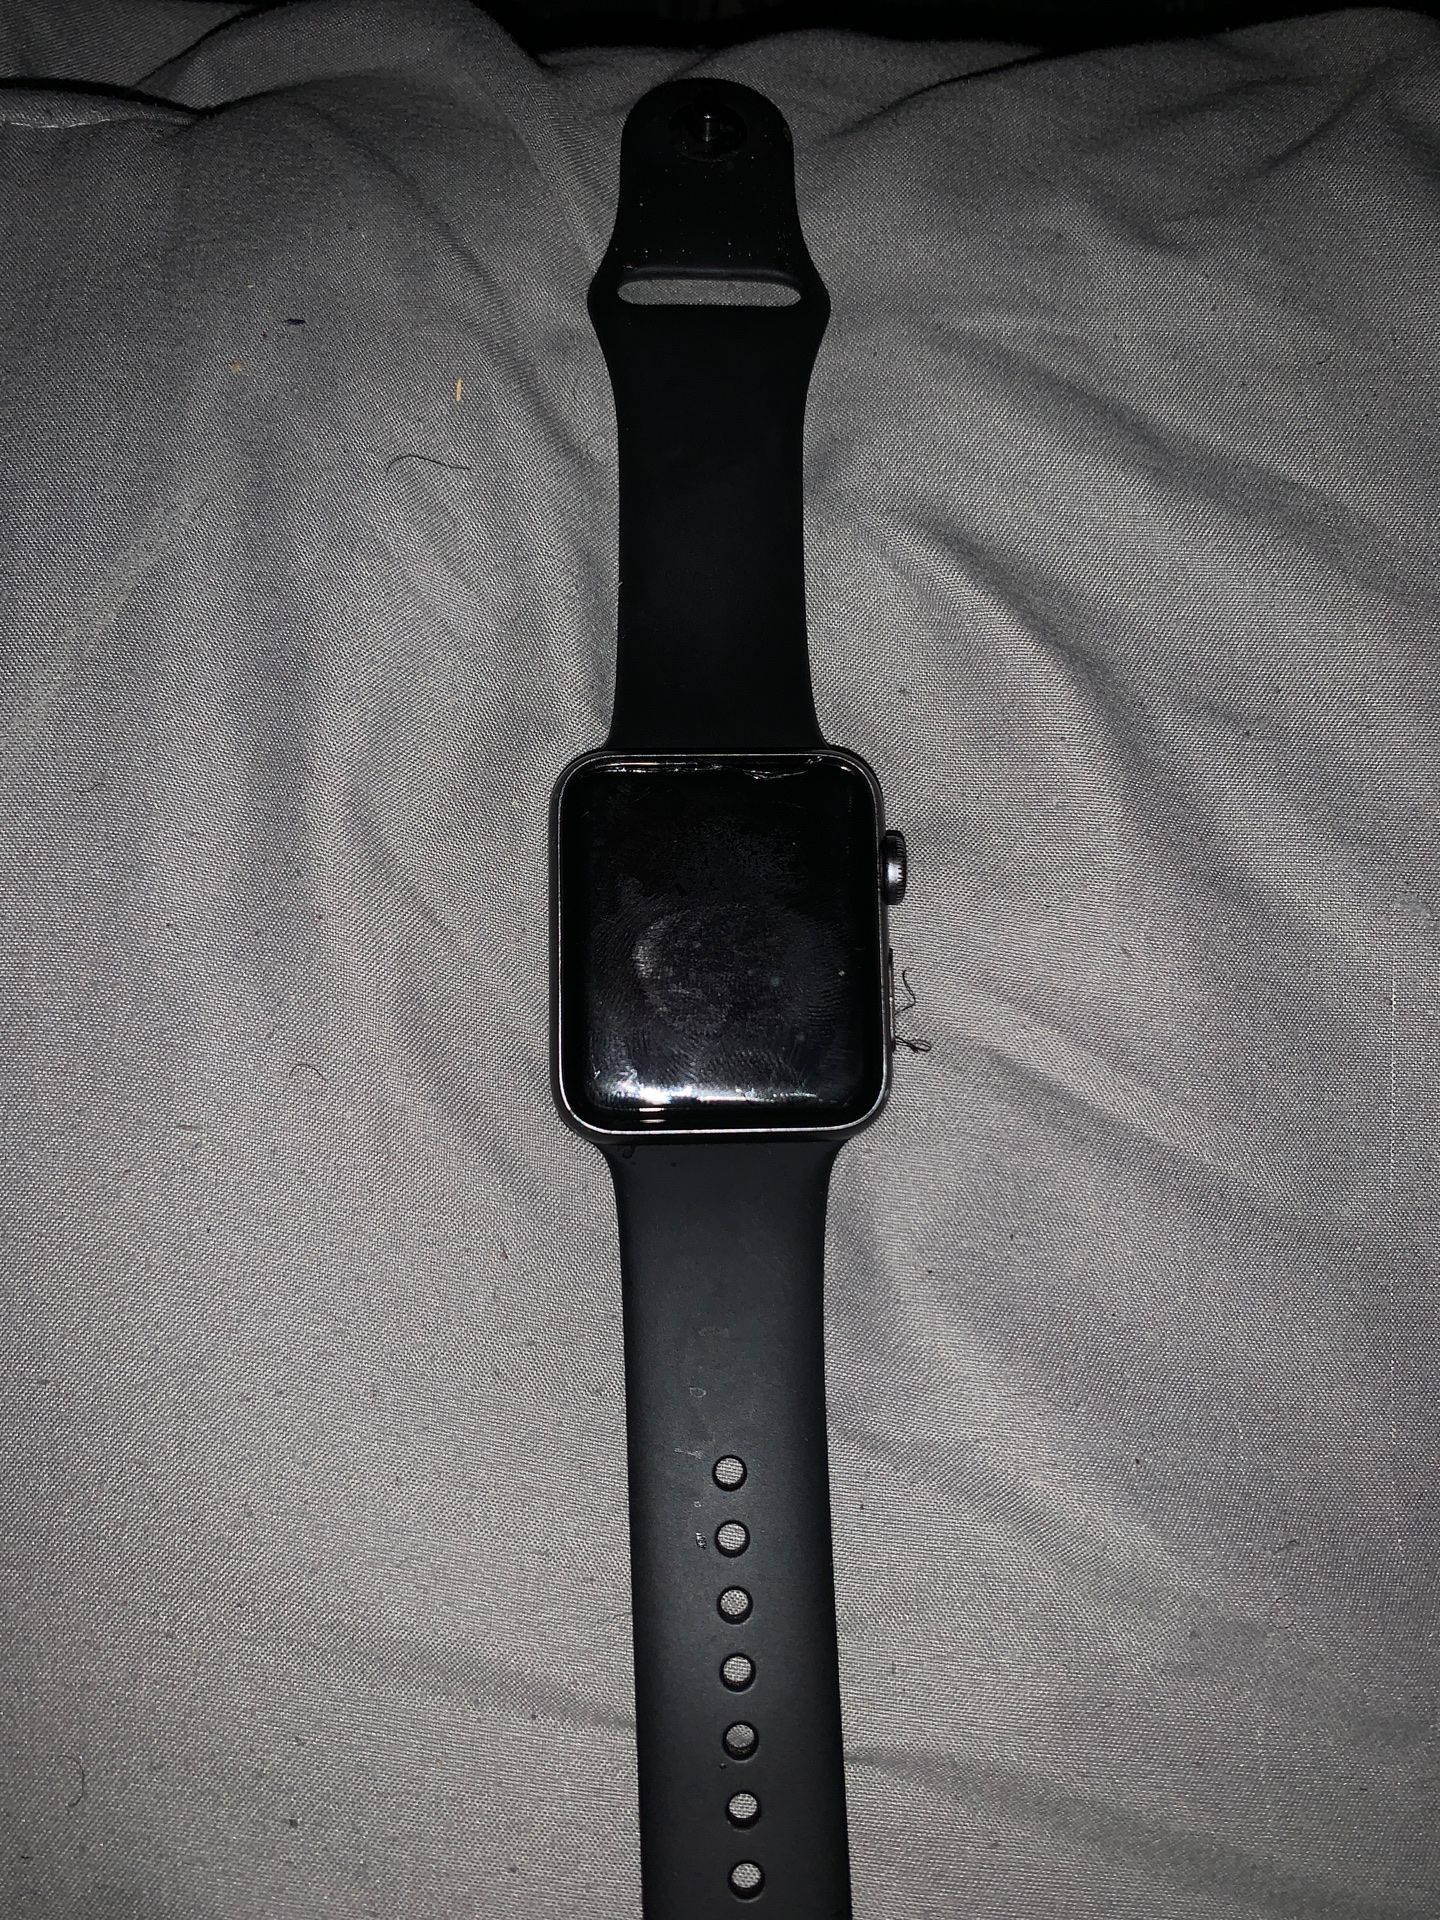 Apple Watch Series 3 Black Friday Sale